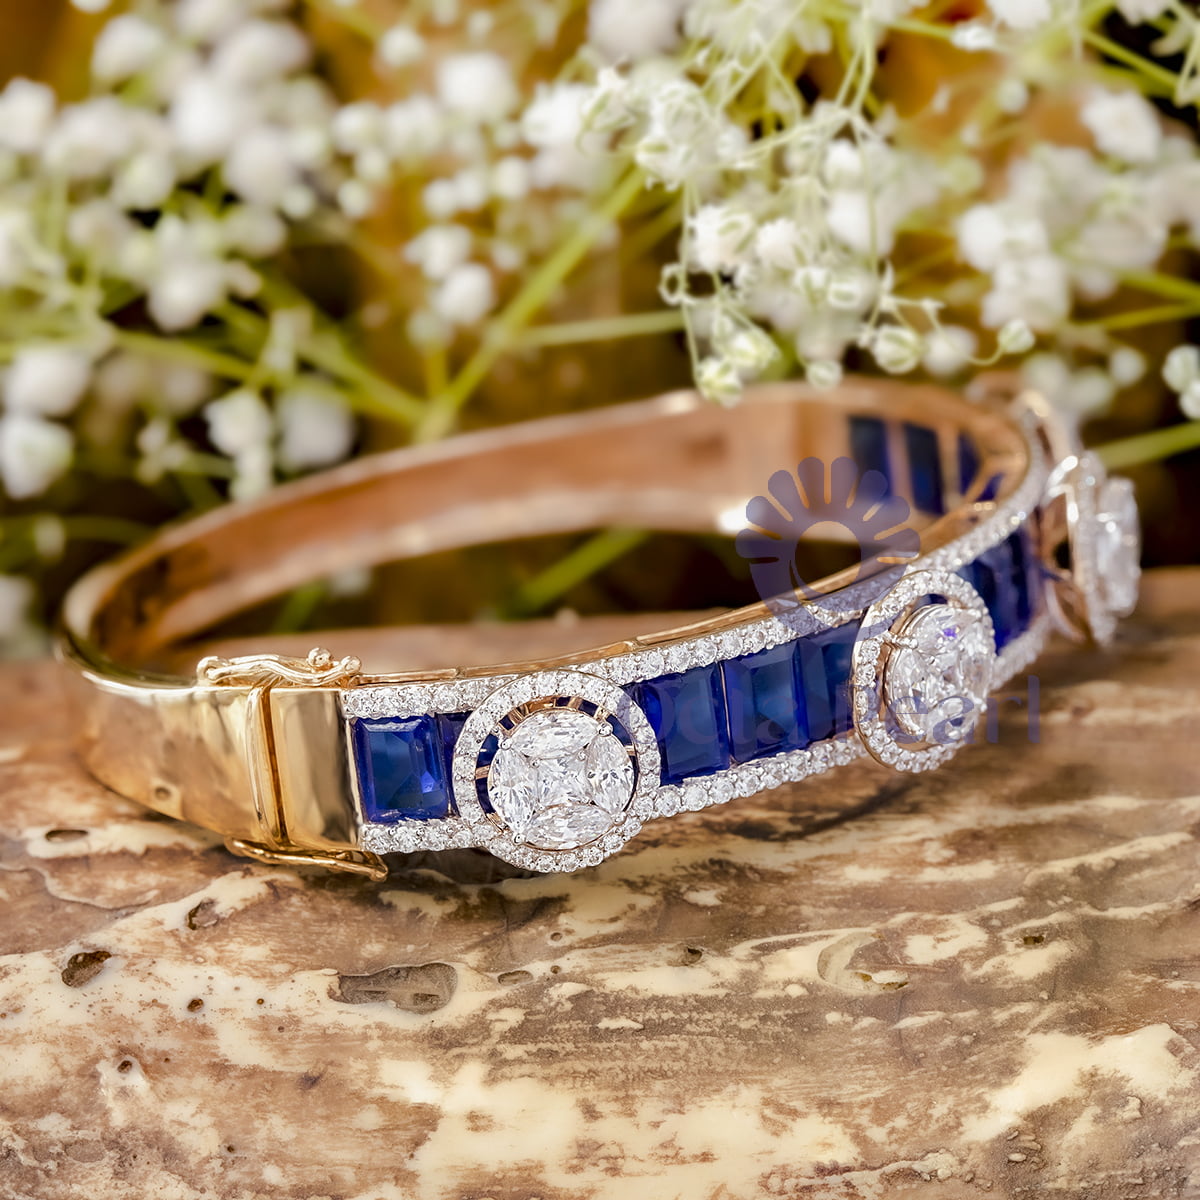 Blue Sapphire Emerald With Multi Cut CZ Stone Studded Bangle Bracelet